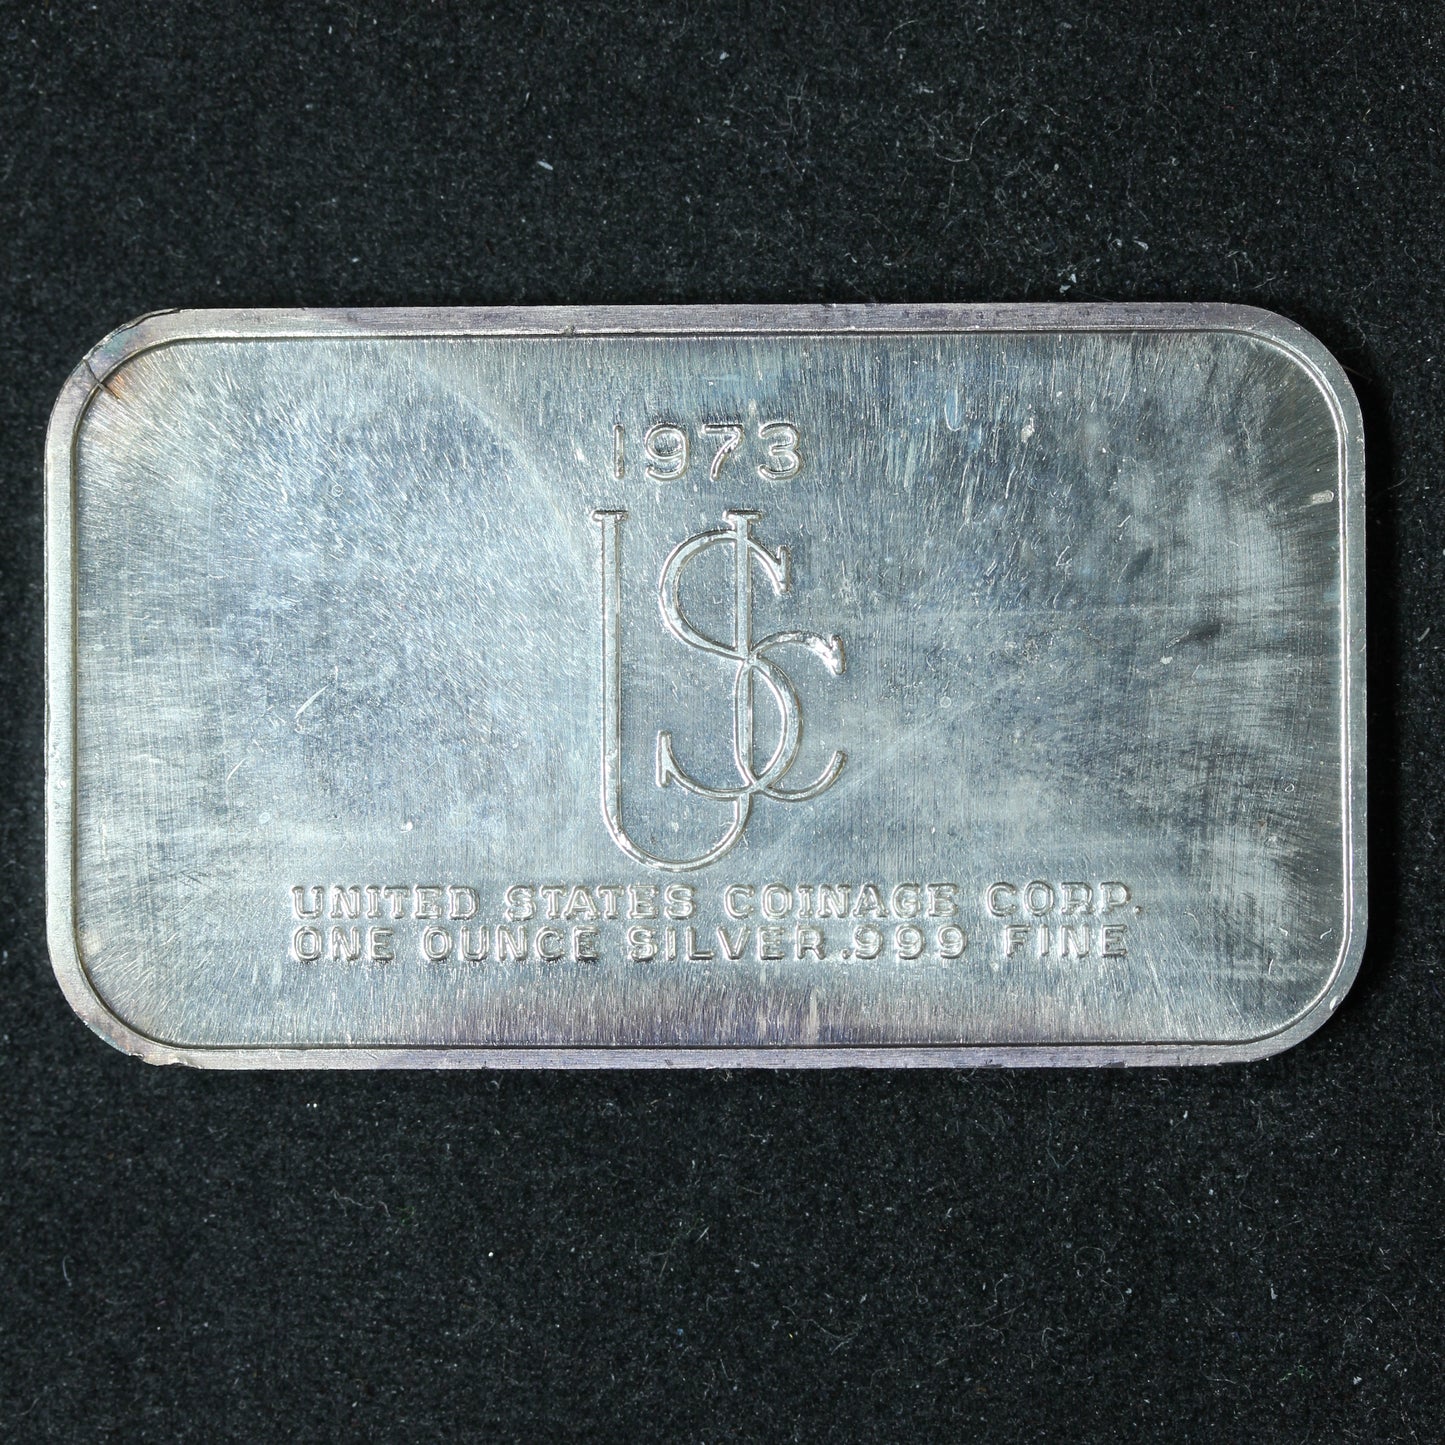 1 oz .999 Fine Silver Bar - 1973 United States Coinage Corp Washington Crossing the Delaware